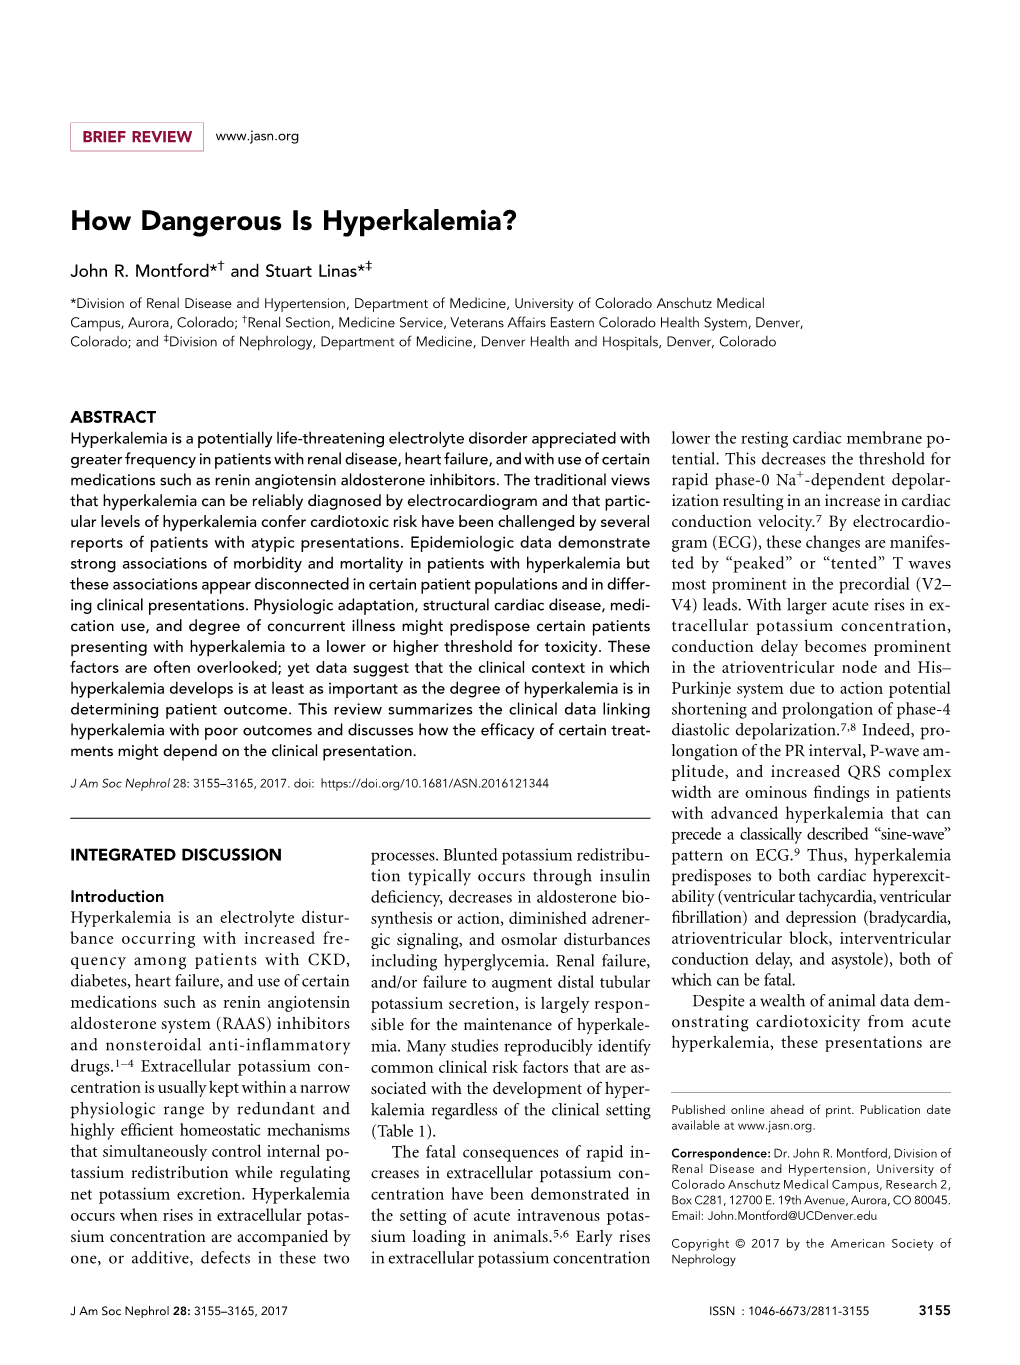 How Dangerous Is Hyperkalemia?